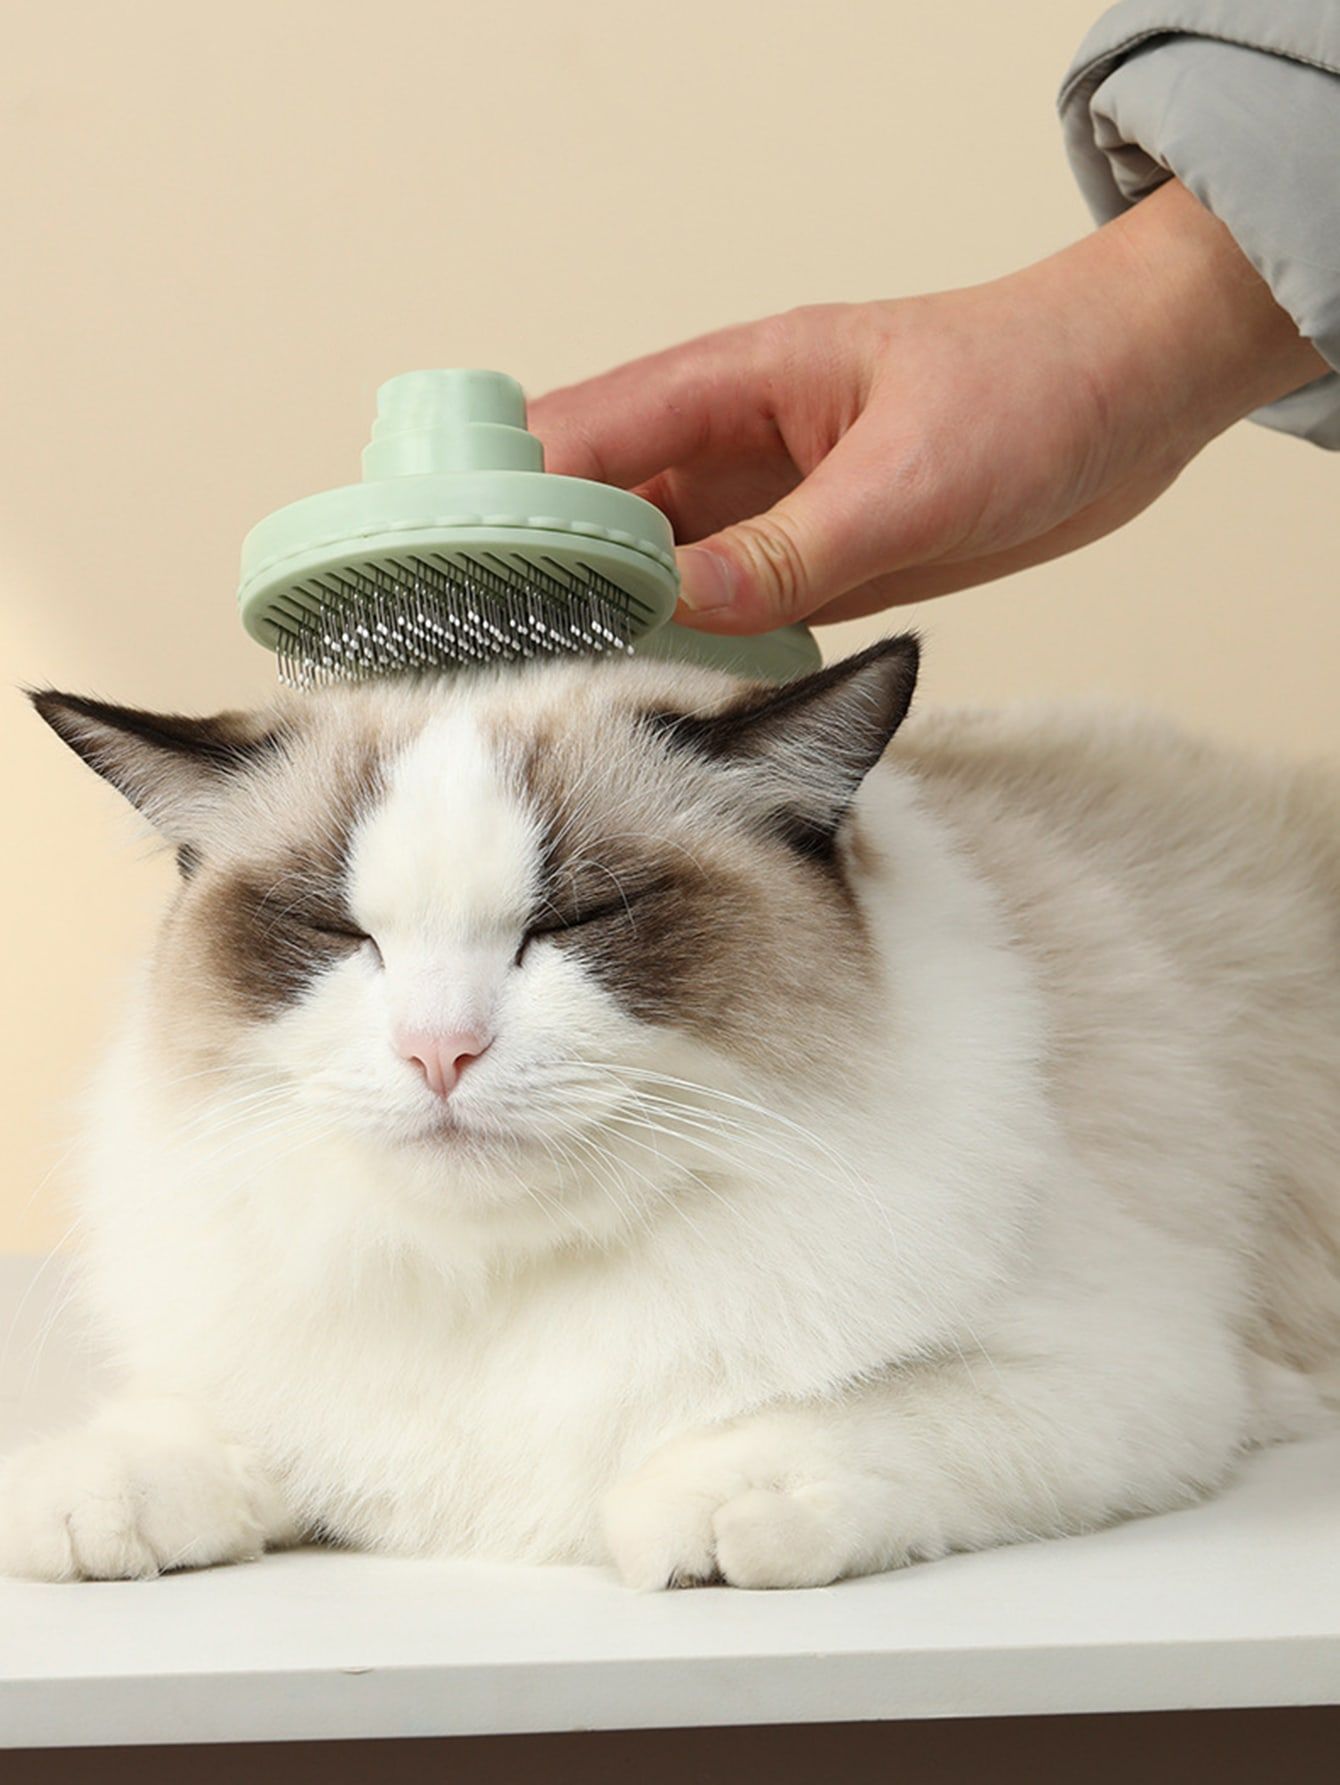 Maanfaat grooming pada kucing